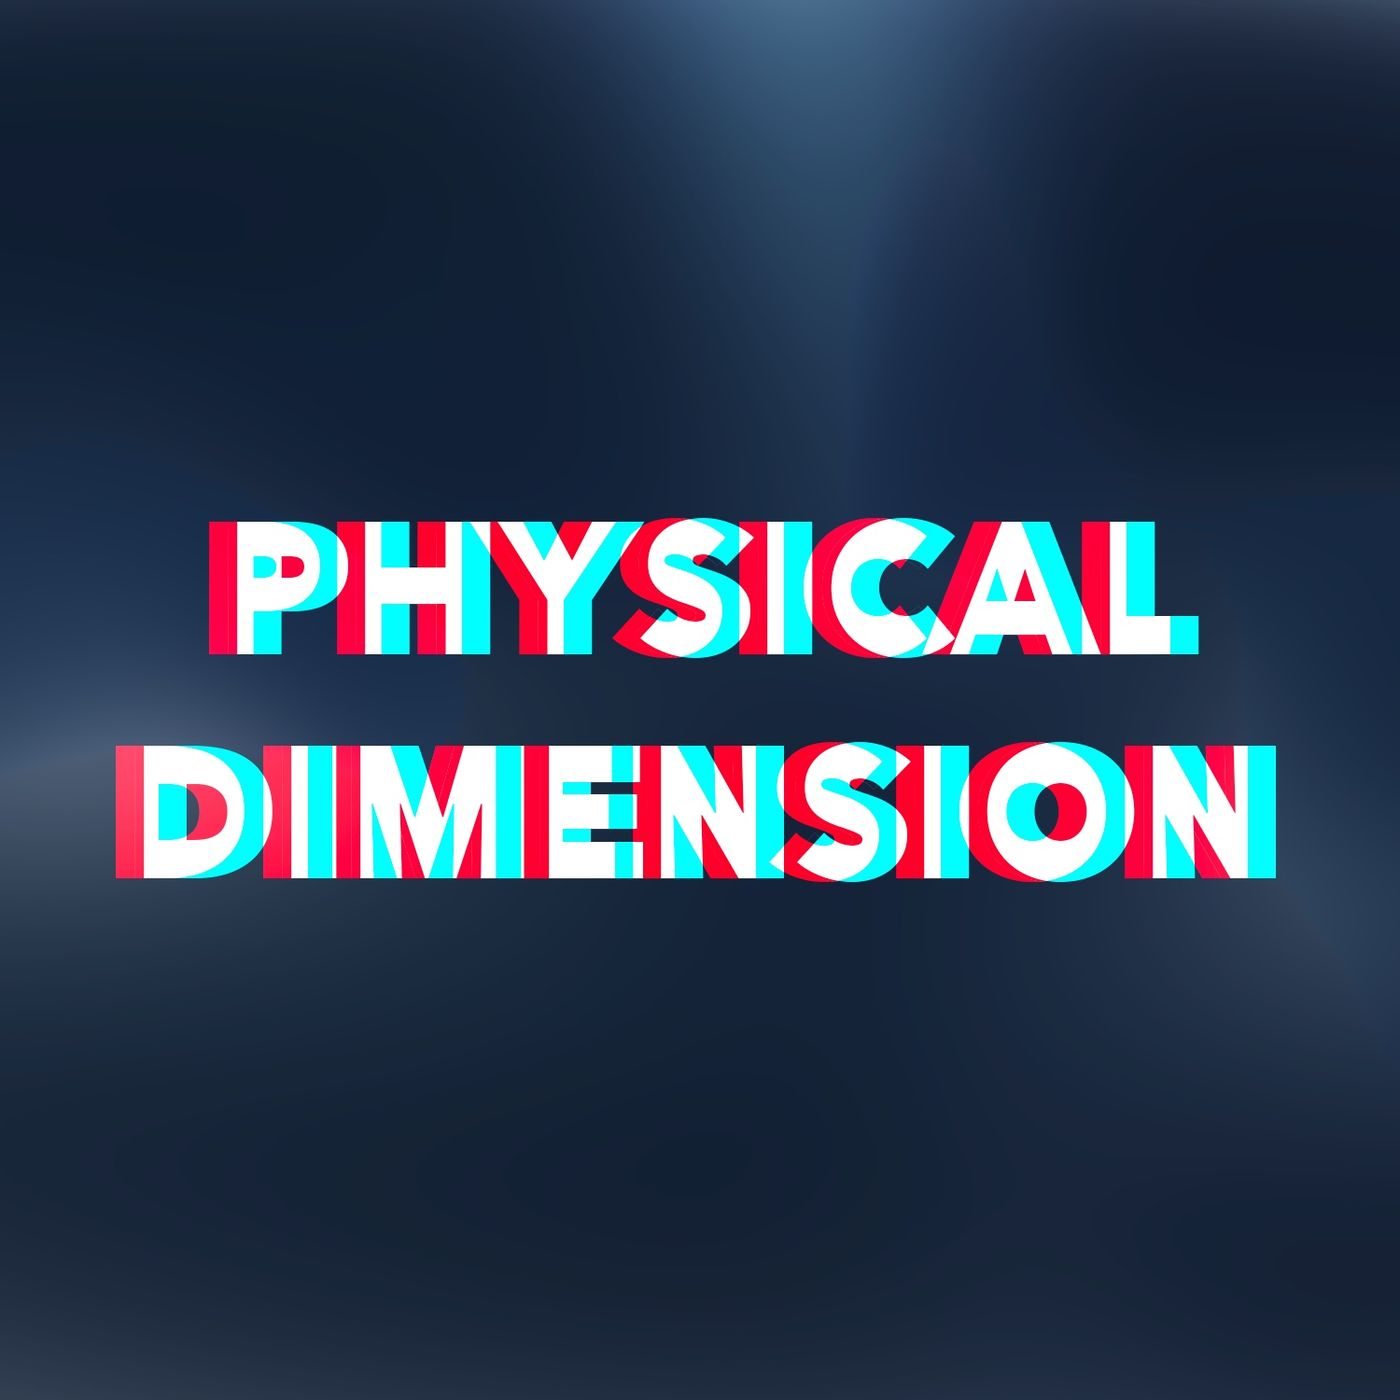 80: Physical Dimension (Dimensional Analysis)